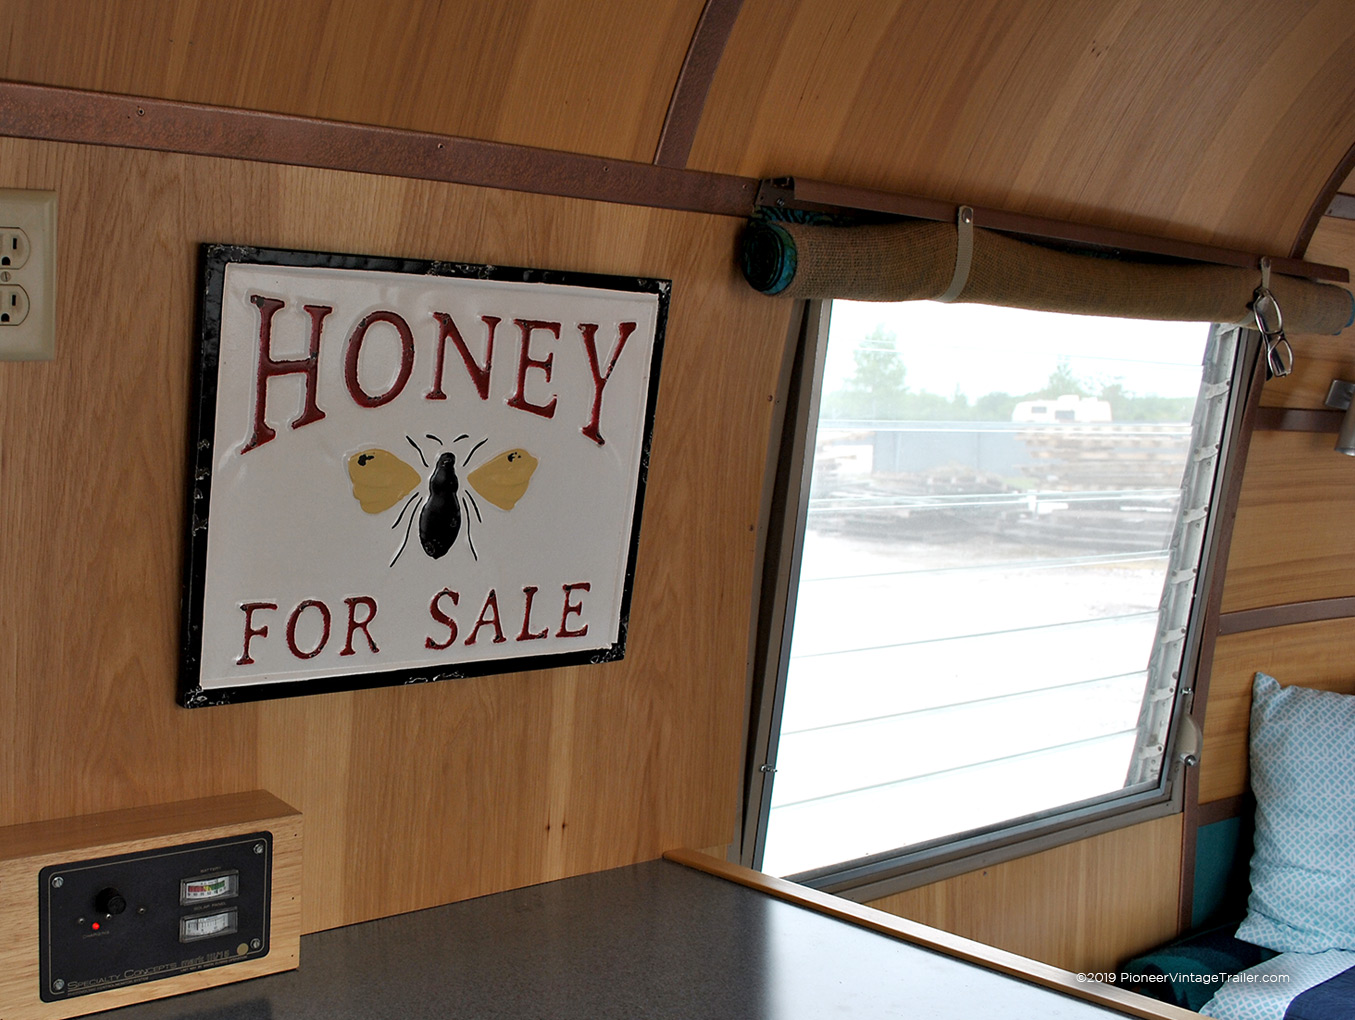 Airstream Safari '64 honey for sale wood interior